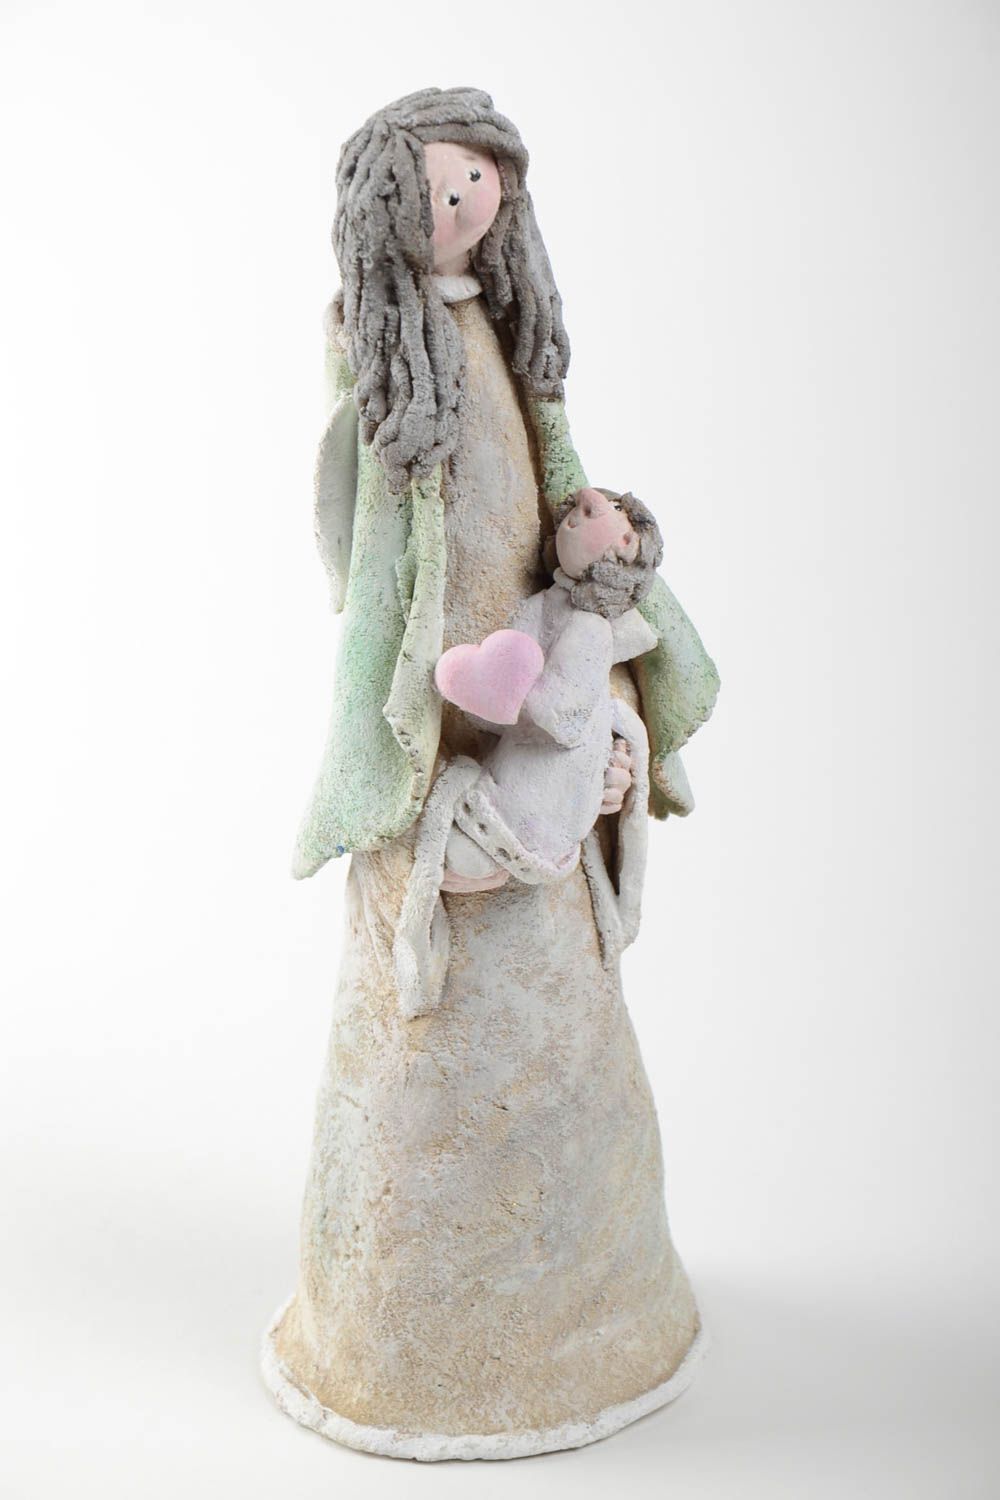 Miniature figurines angel statue homemade home decor gift ideas for women photo 2